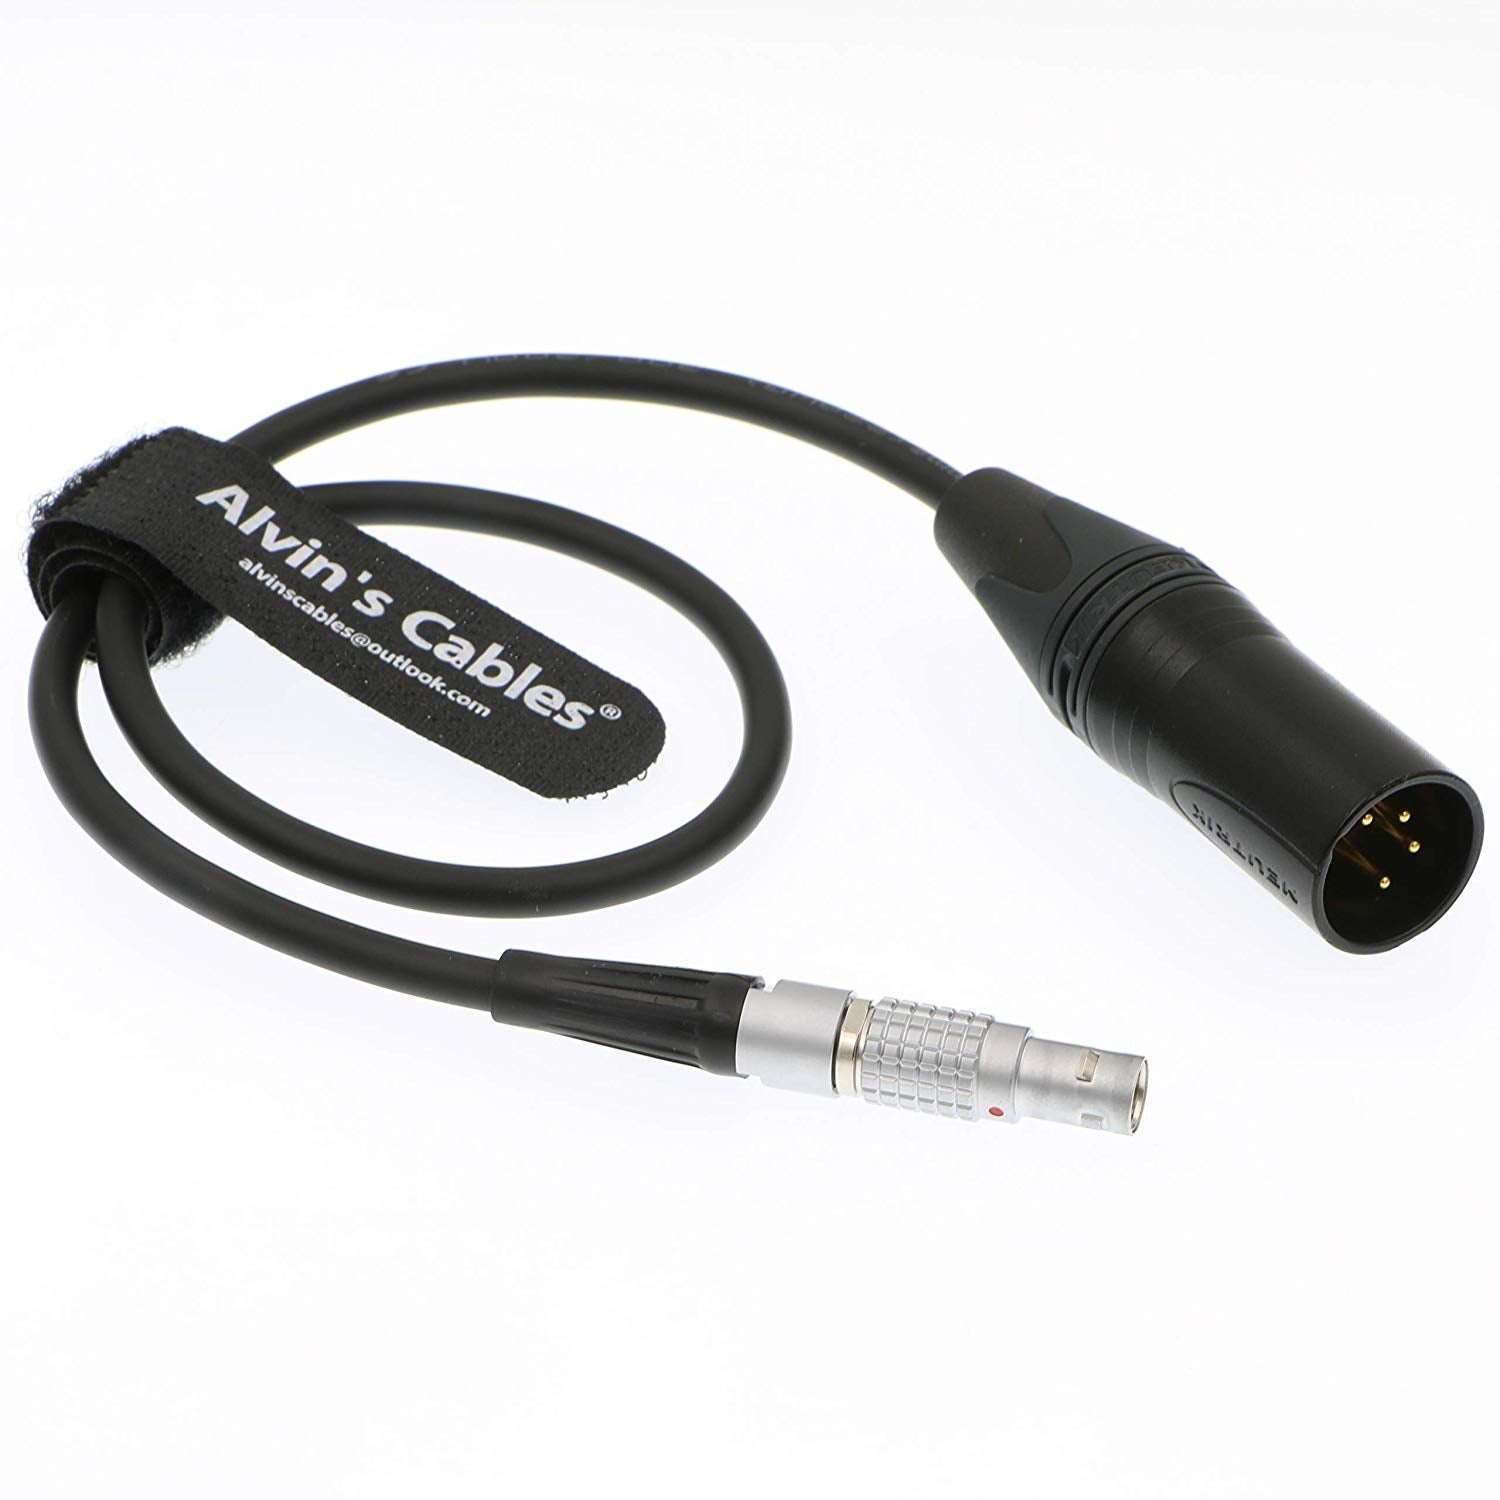 Alvin's Cables XLR 4 Pin Stecker auf 2 Pin Stecker Kabel für Teradek Bolt Pro 2000